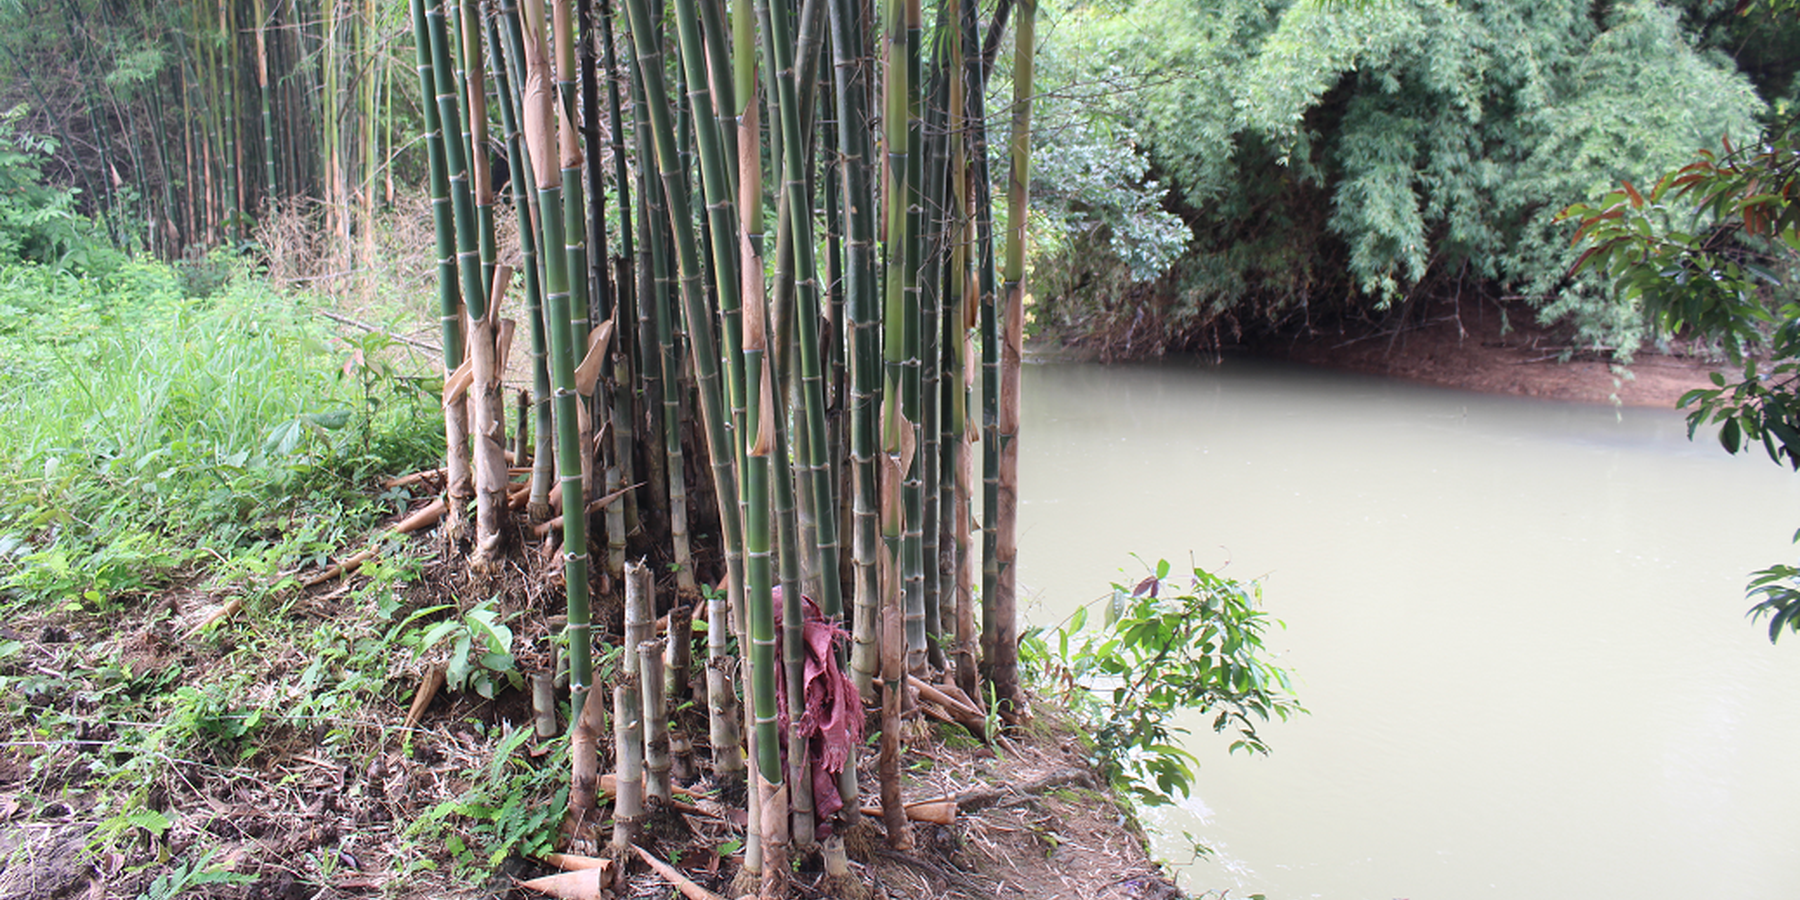 Bambusa oldhamii planting along river bank to protect soil erosion